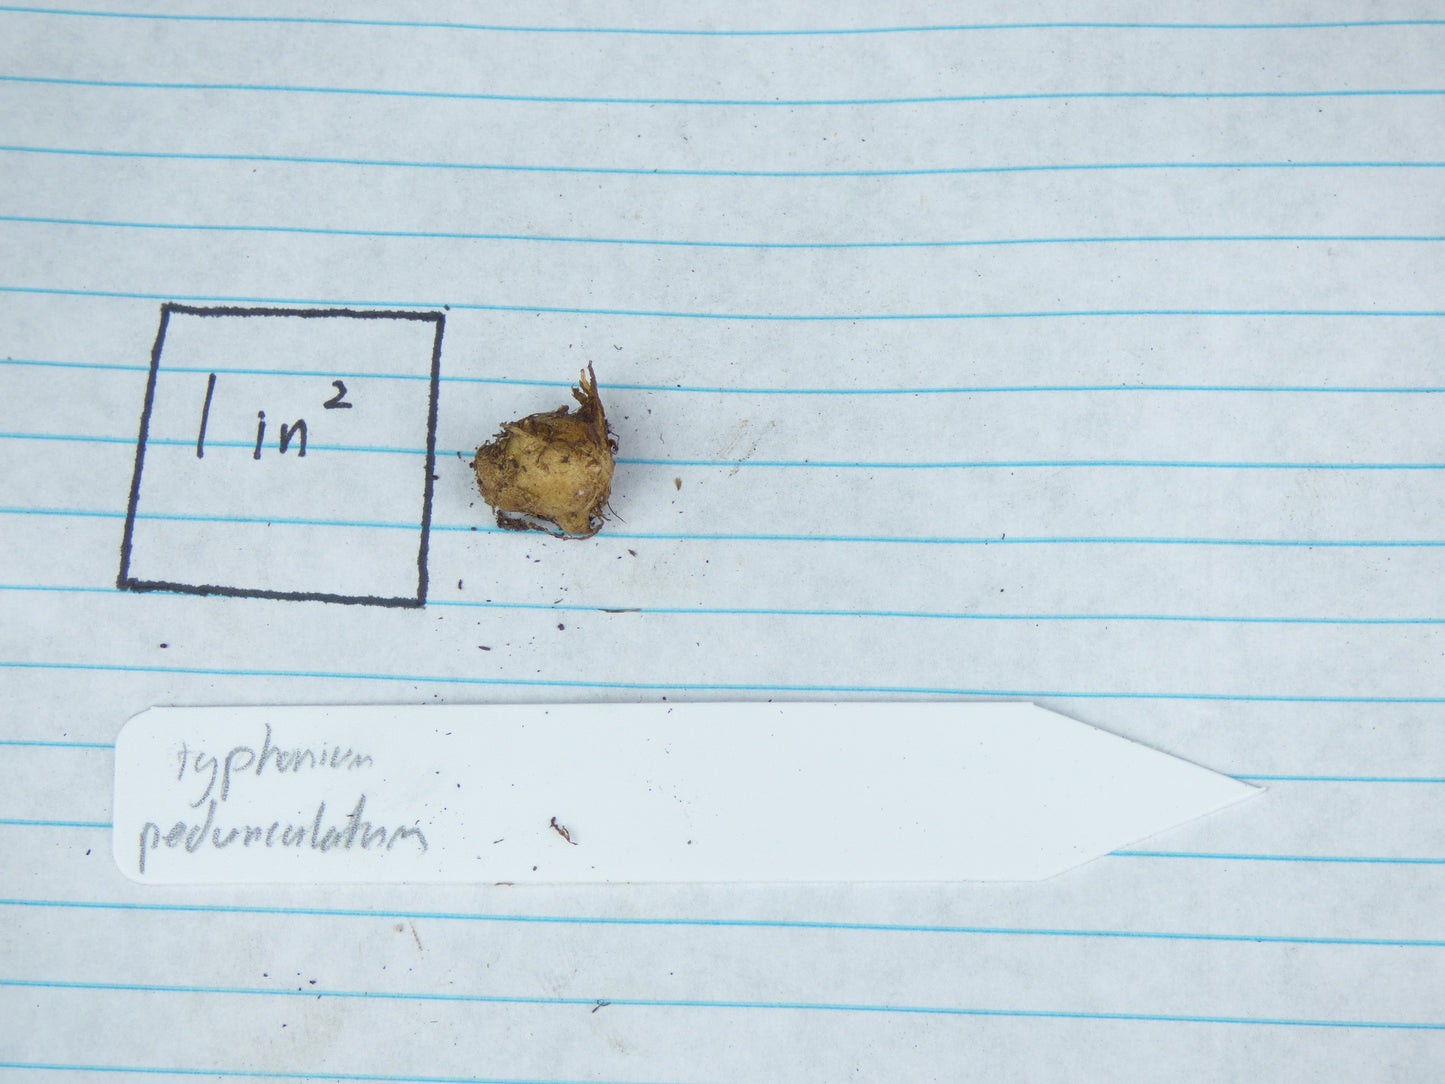 Typhonium pedunculatum - Seedling size